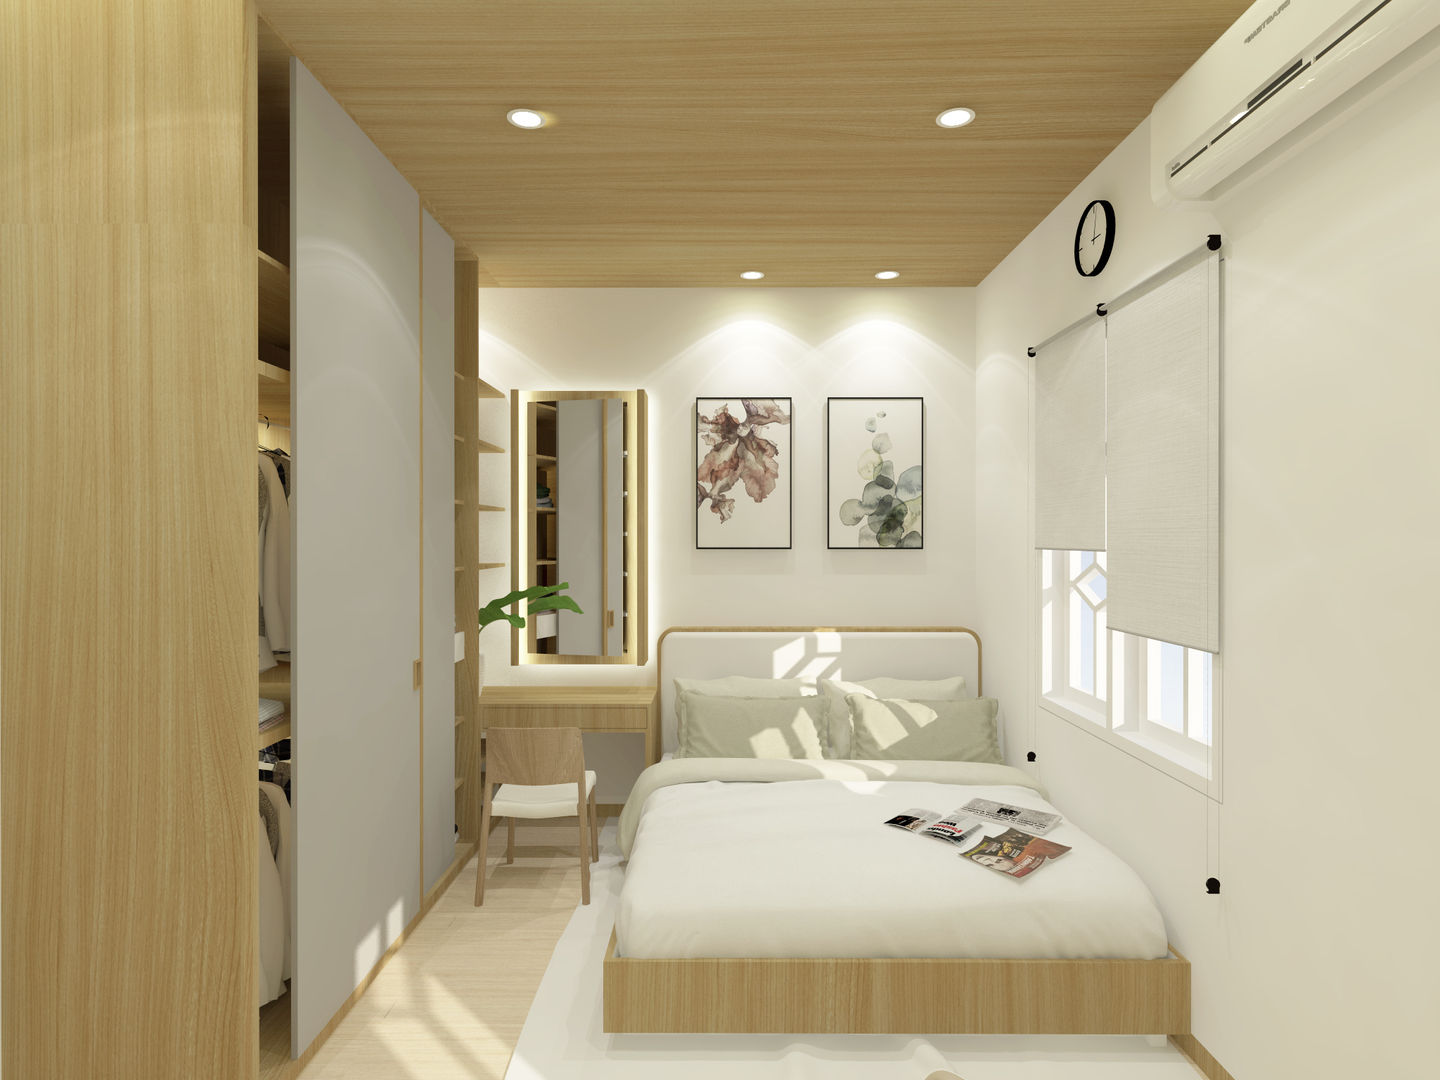 Mr.Adrian's Bedroom Design, SEKALA Studio SEKALA Studio Dormitorios modernos